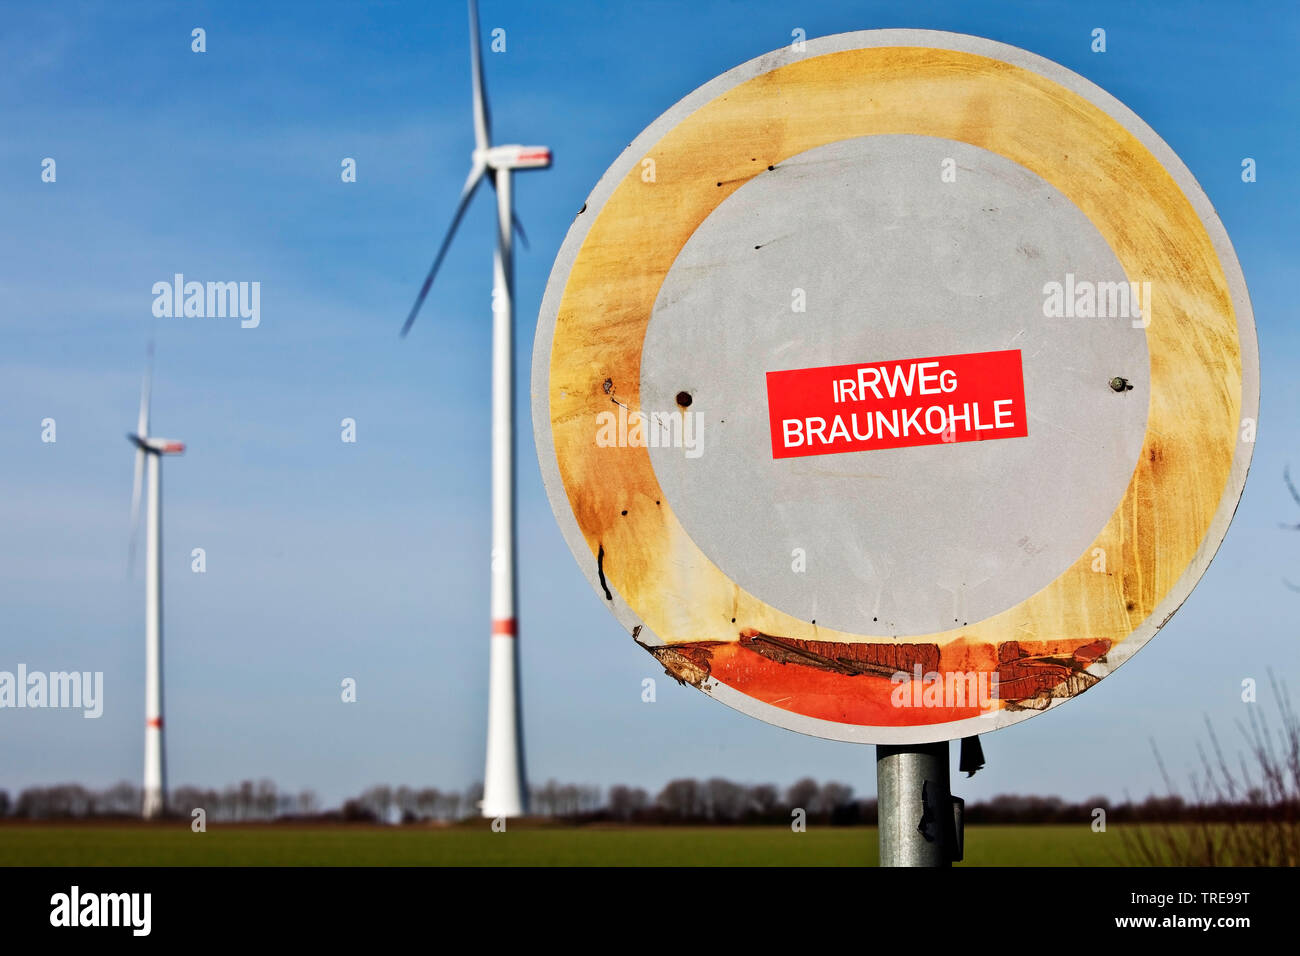 sticker 'IrRWEg Braunkohle' on a traffic sign 'No thoroughfare' and wind plants, Germany, North Rhine-Westphalia, Grevenbroich Stock Photo